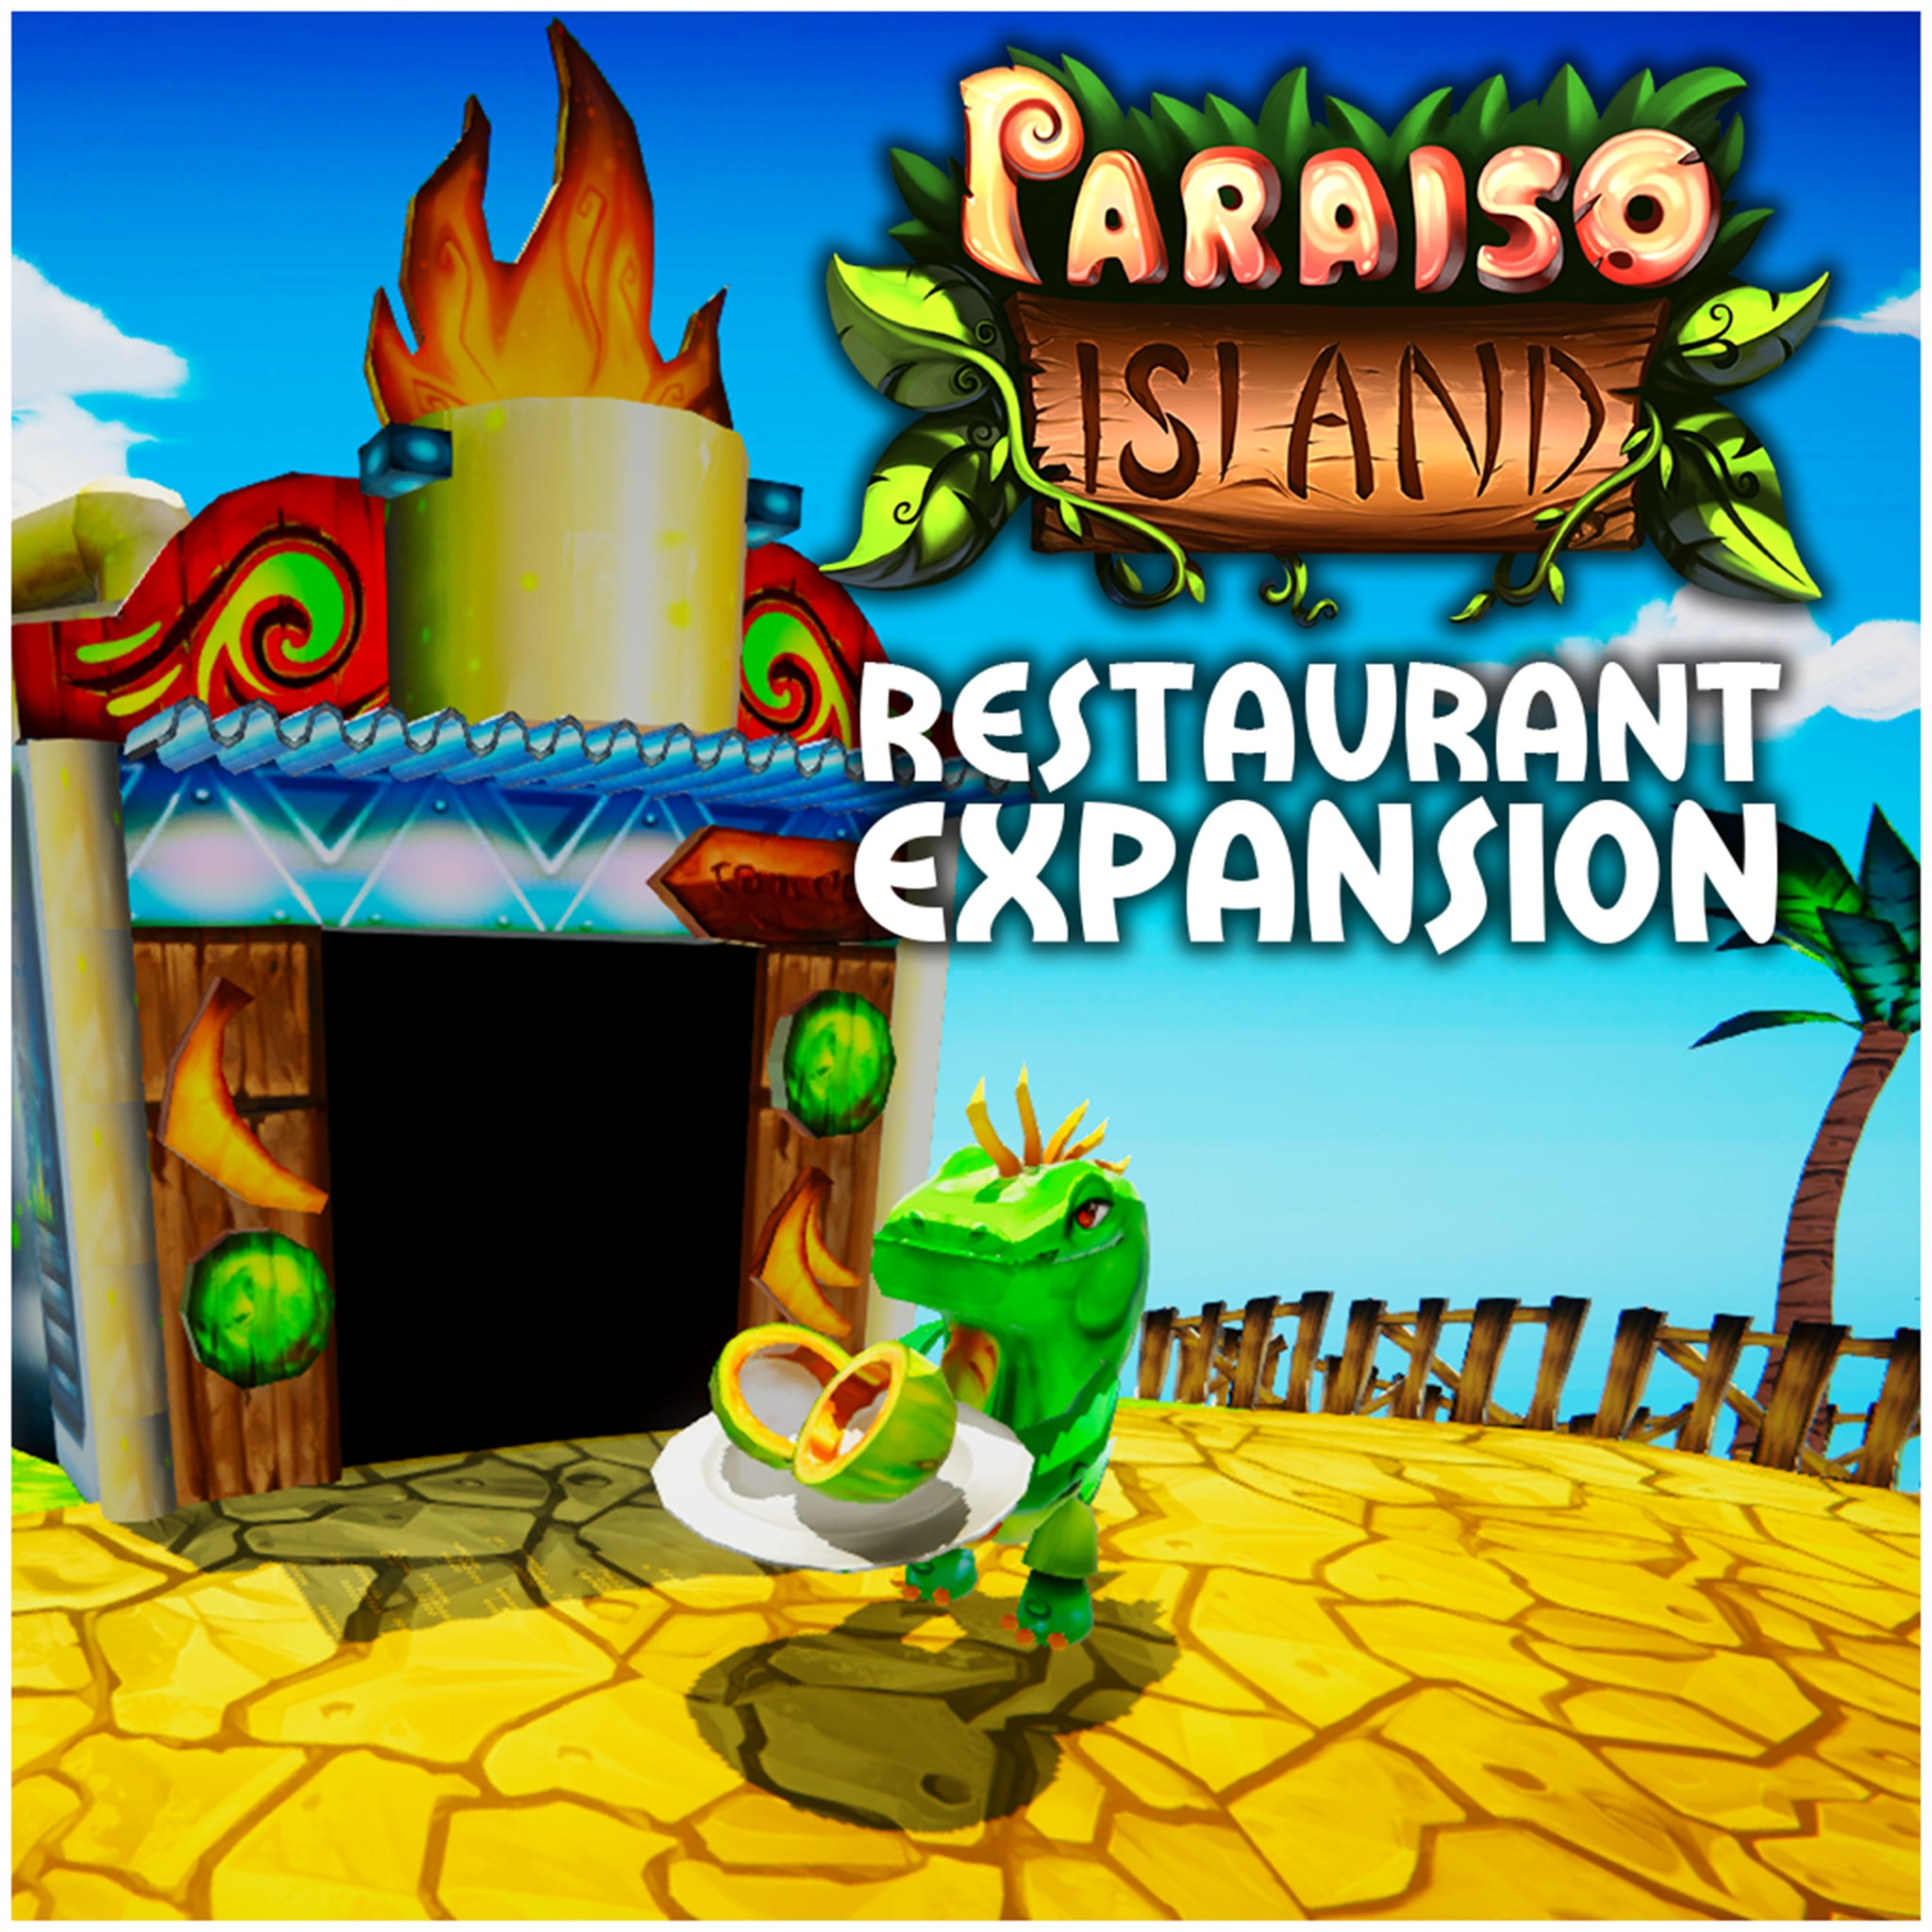 Paraiso Island Restaurant Expansion (English/Chinese/Korean Ver.)